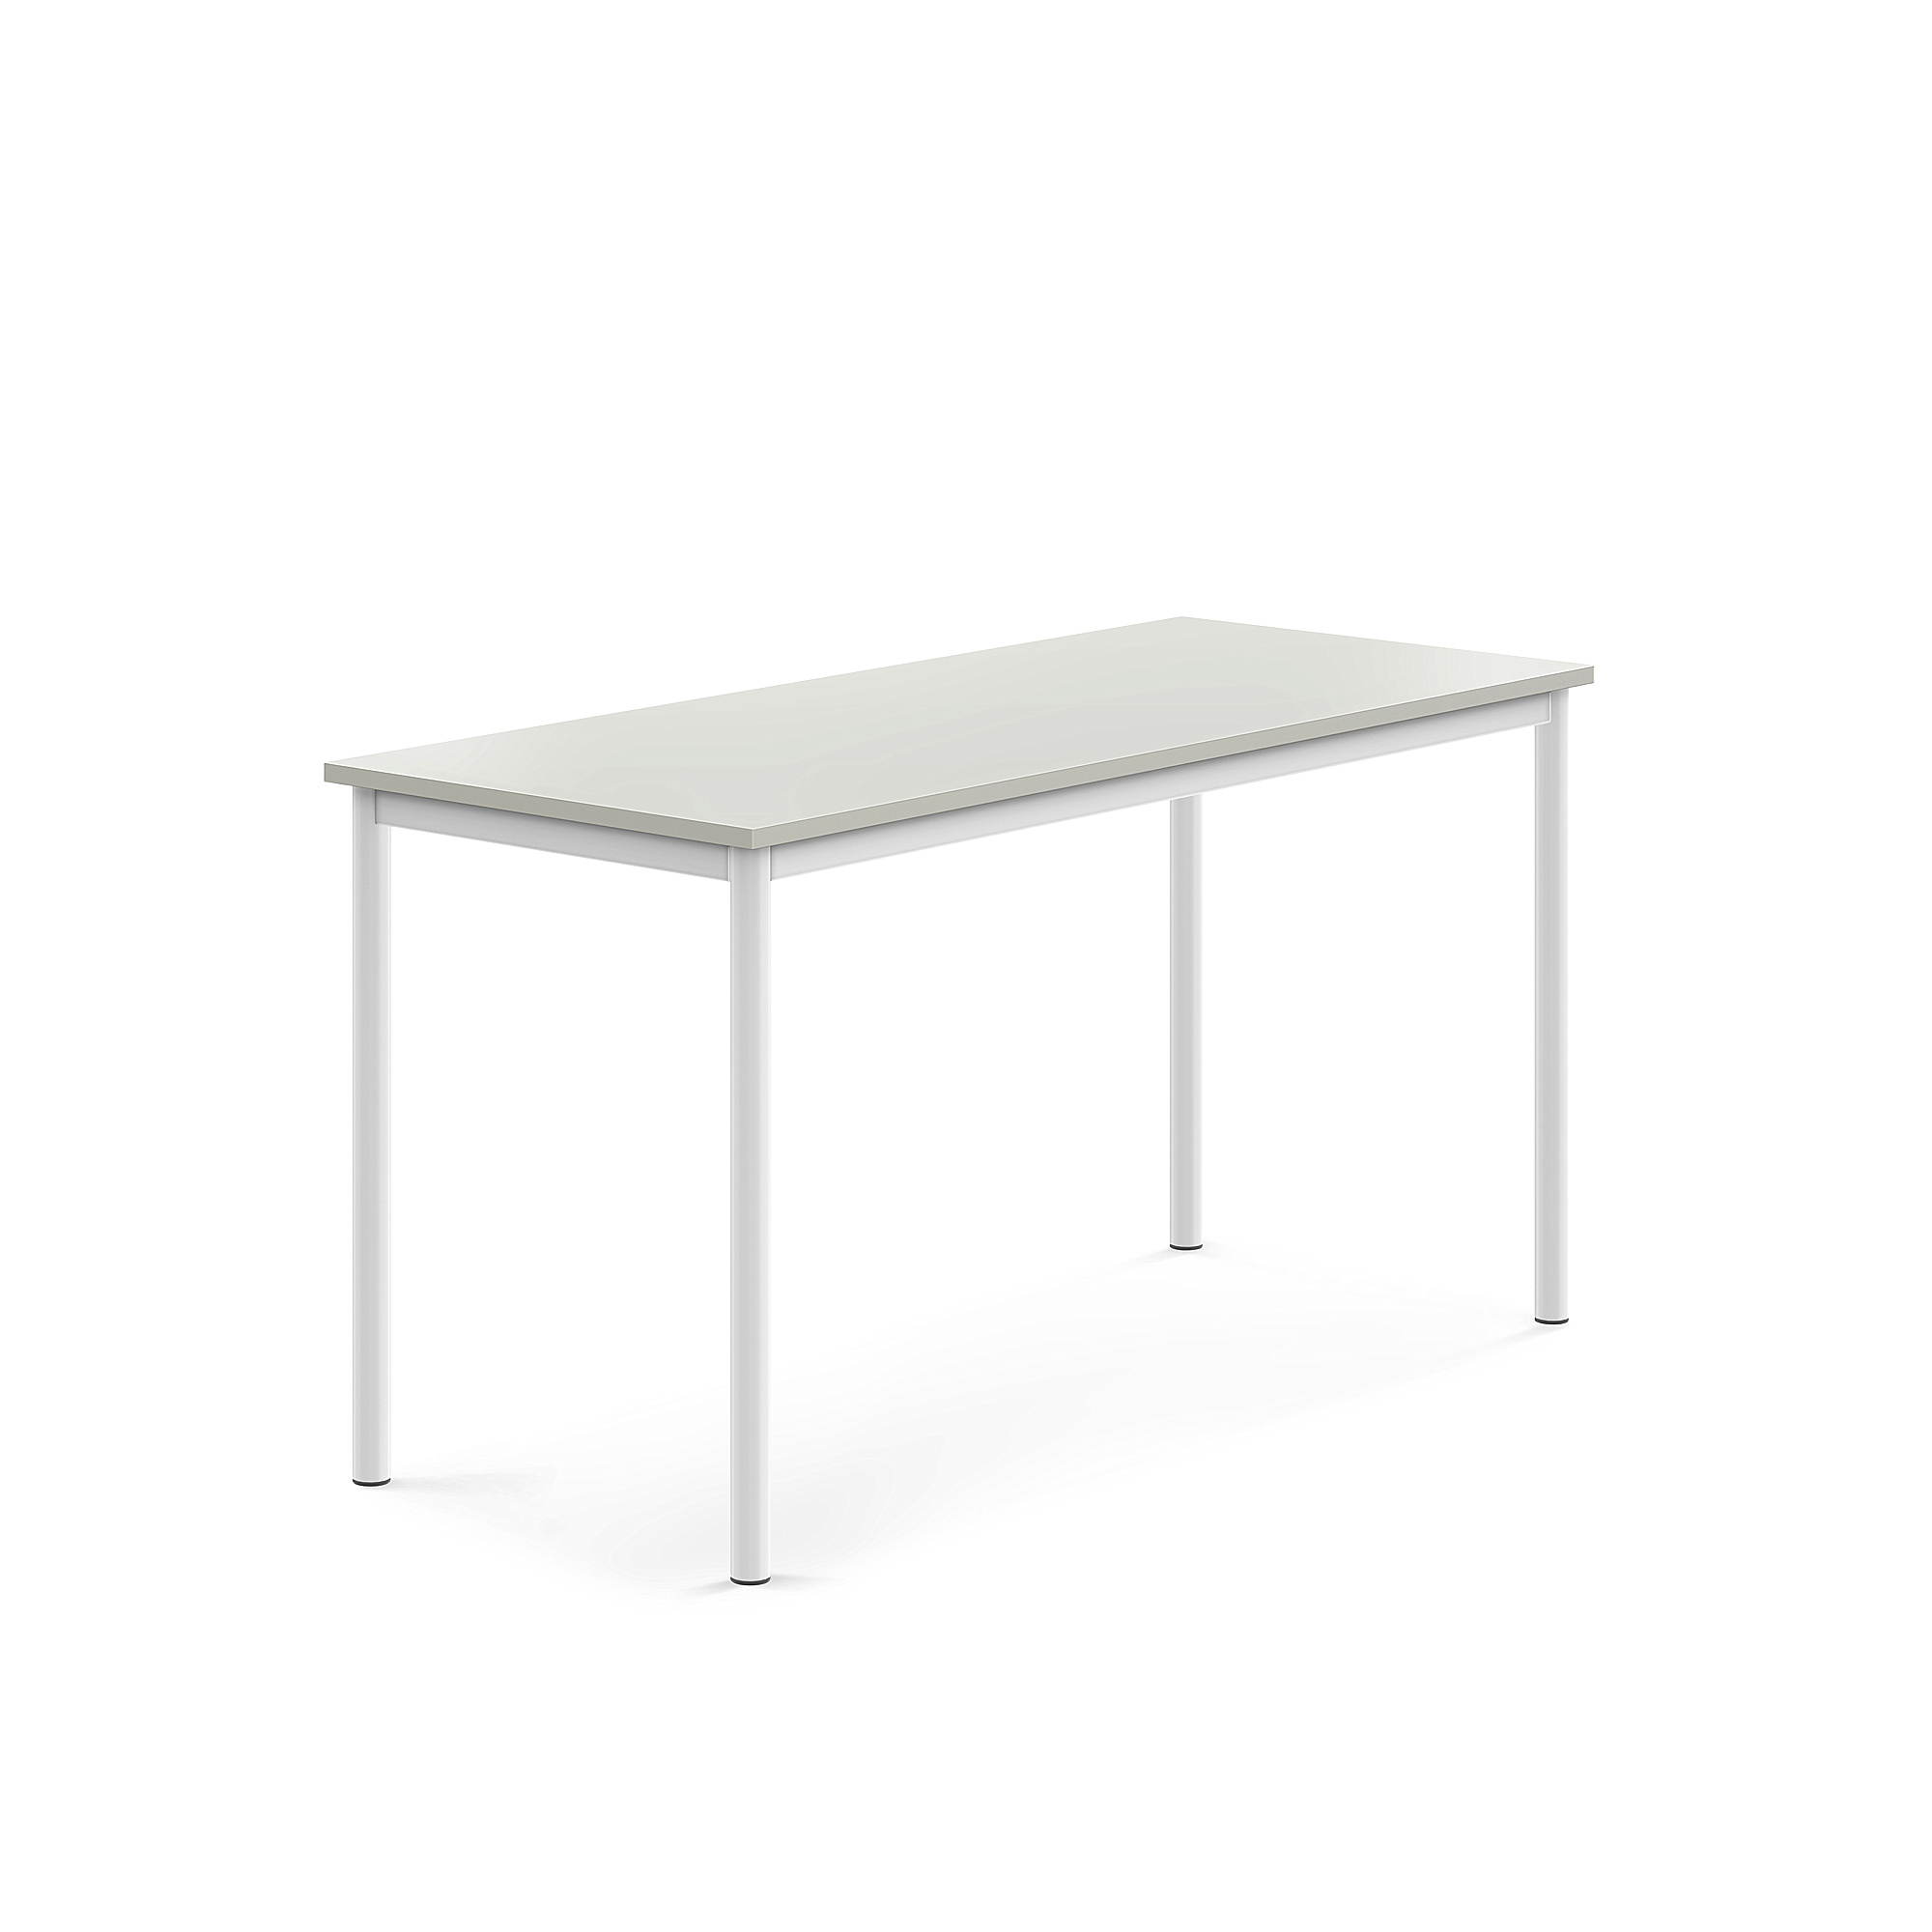 Stůl SONITUS, 1400x600x720 mm, bílé nohy, HPL deska tlumící hluk, šedá